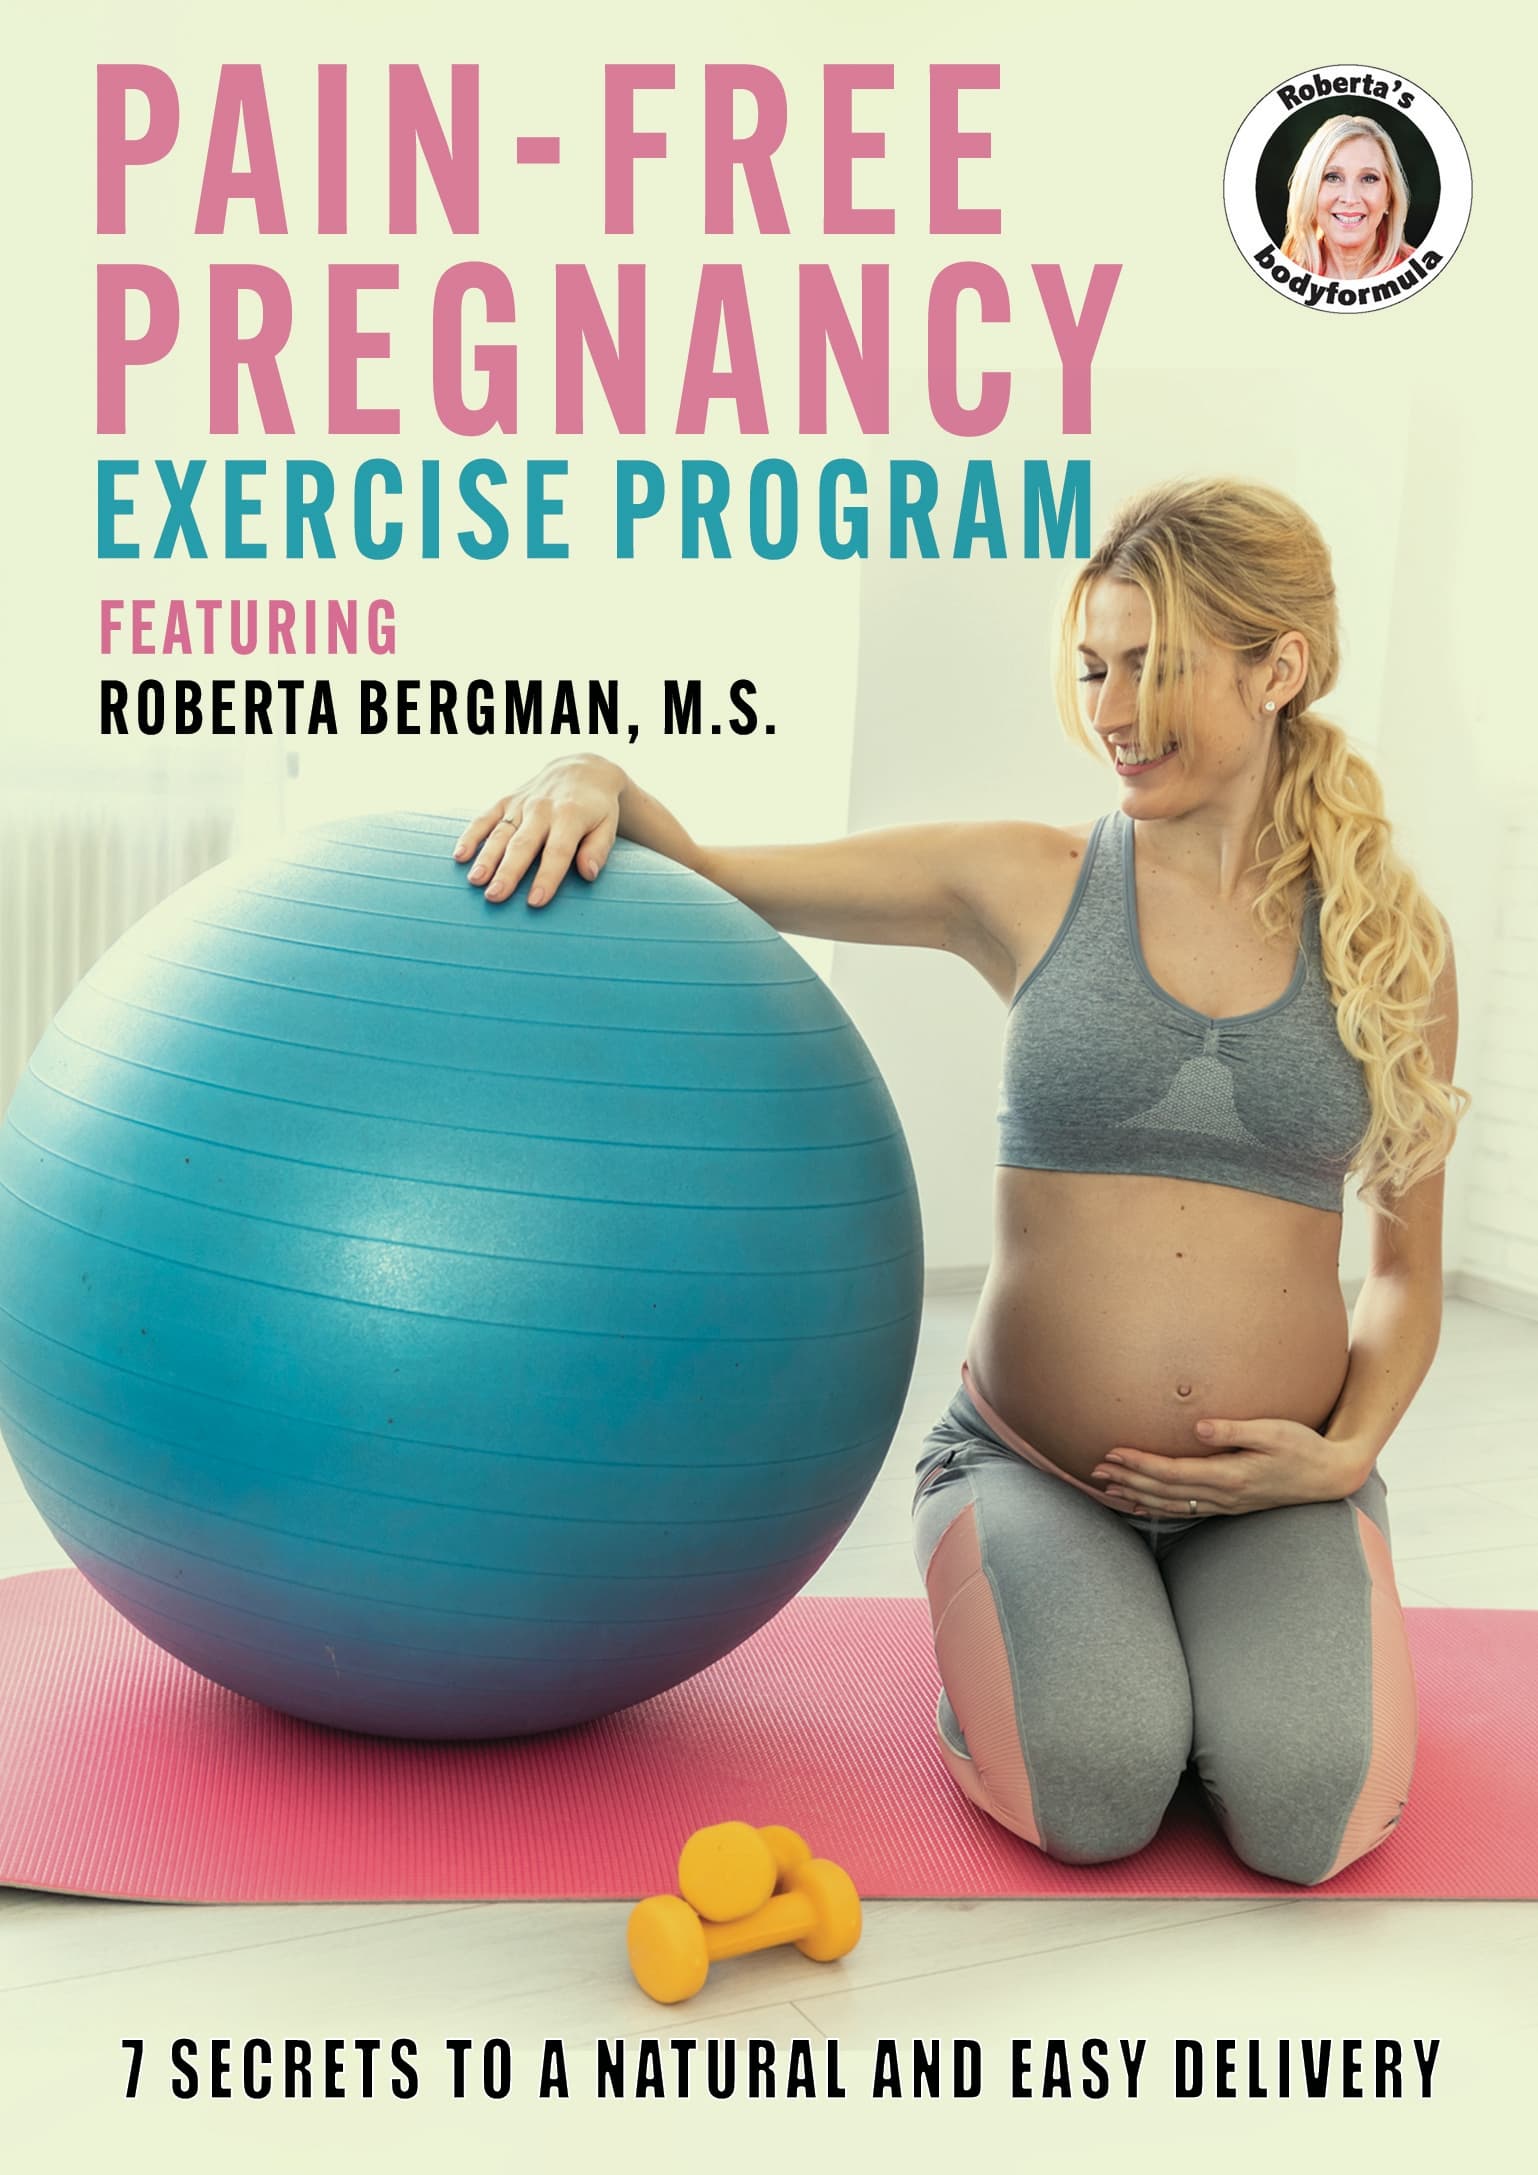 Roberta's Pain-Free Pregnancy: Exercise Program